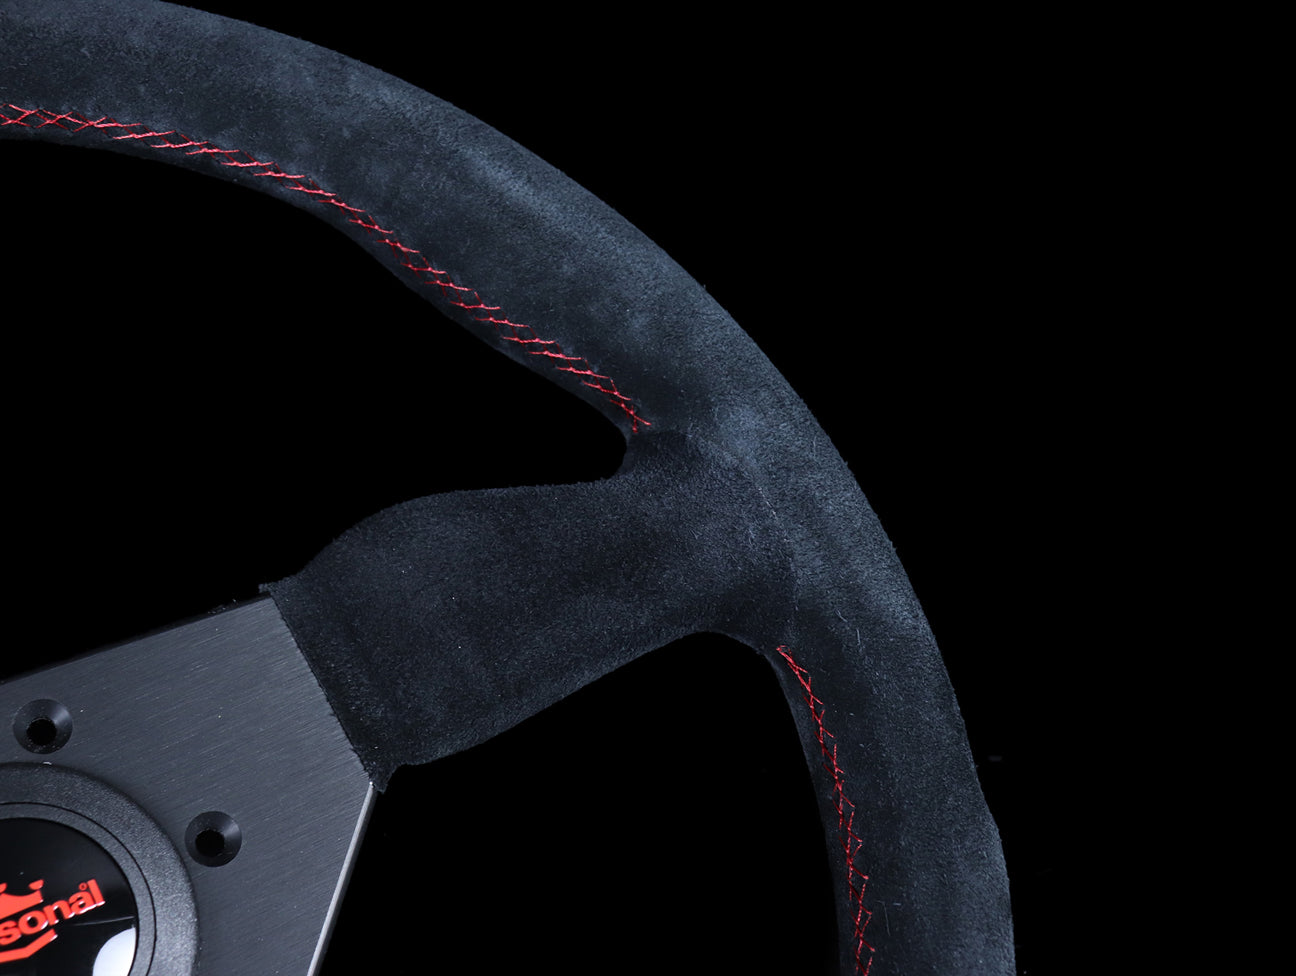 Personal Grinta 330mm Steering Wheel - Black Suede / Red Stitch